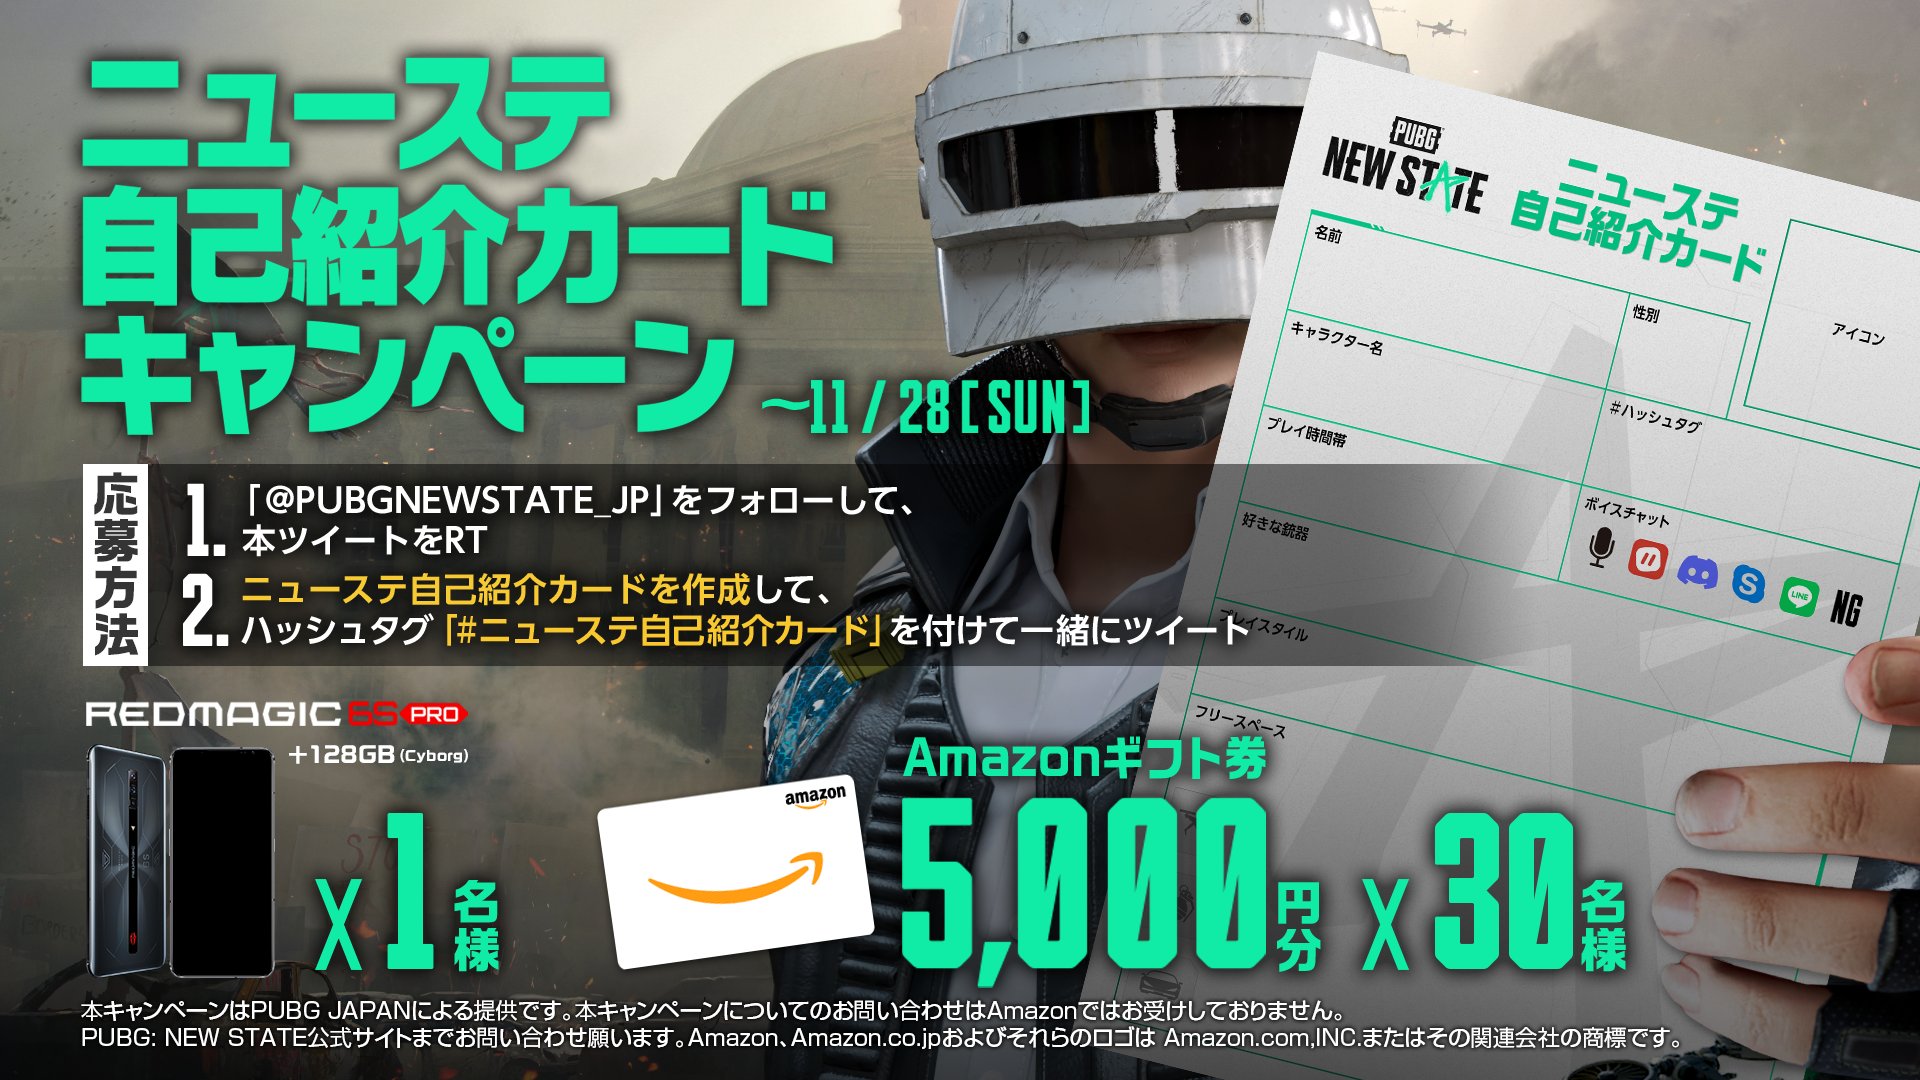 New State Mobile Japan ニューステ自己紹介カードキャンペーン開催 ニューステ自己紹介カード を記入して応募しよう Amazonギフト券 や Redmagicjp 様からご提供いただいた Redmagic 6s Pro Cyborg をプレゼントします 自己紹介カード